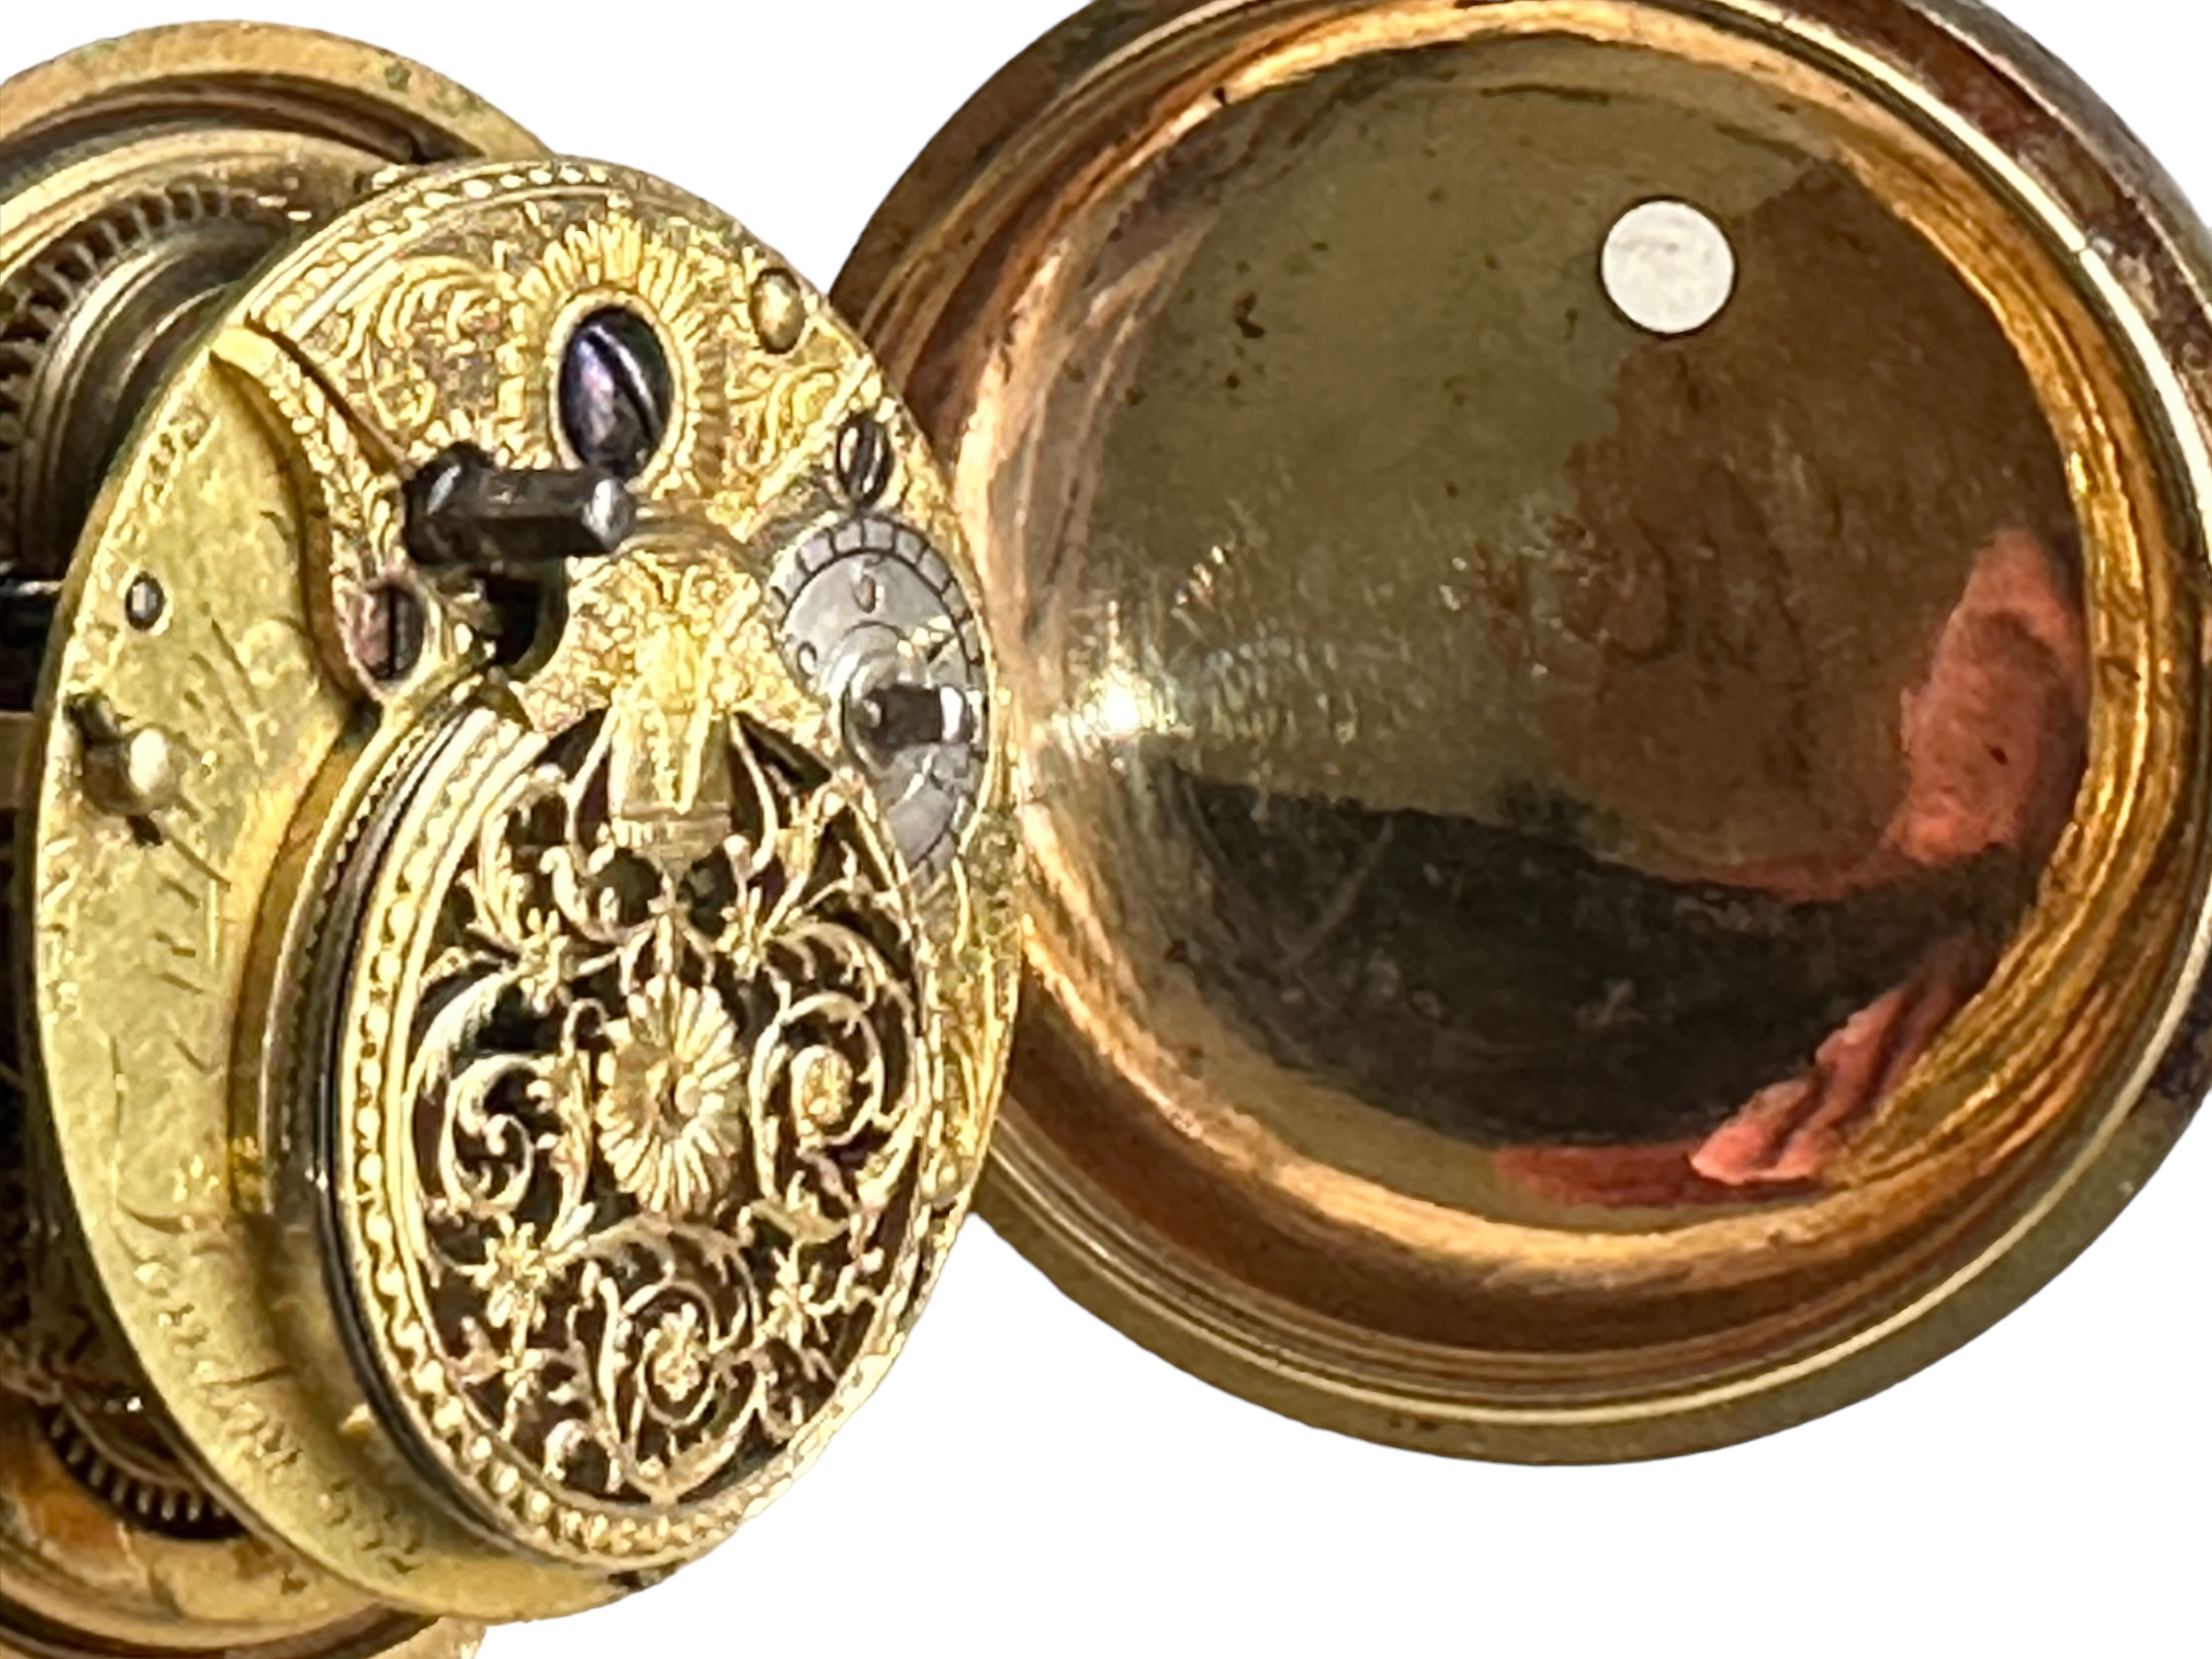 Antique Martin Royal Exchange London Verge Pocket Watch - Gold Case? - working order. - Image 13 of 16